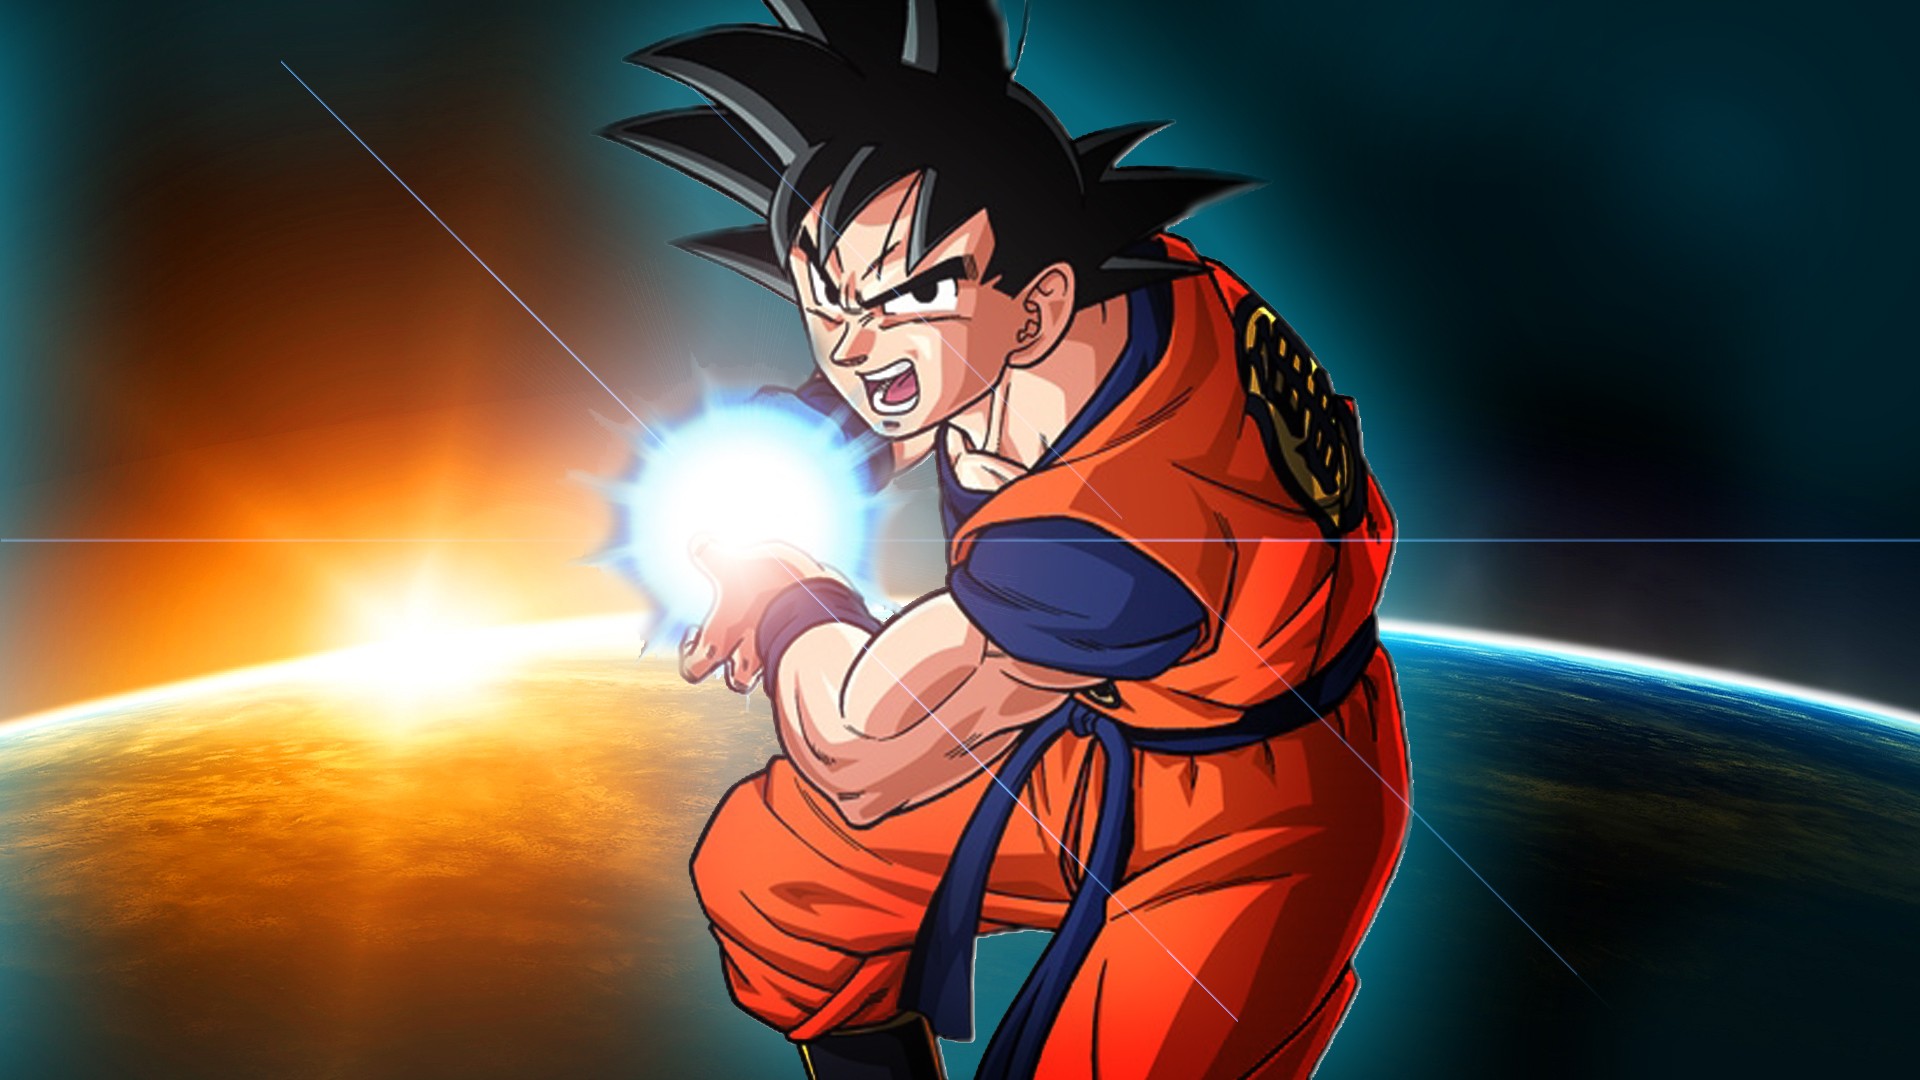 Download Goku Kamehameha Dragon Ball Z Wallpaper Free By udhao.net